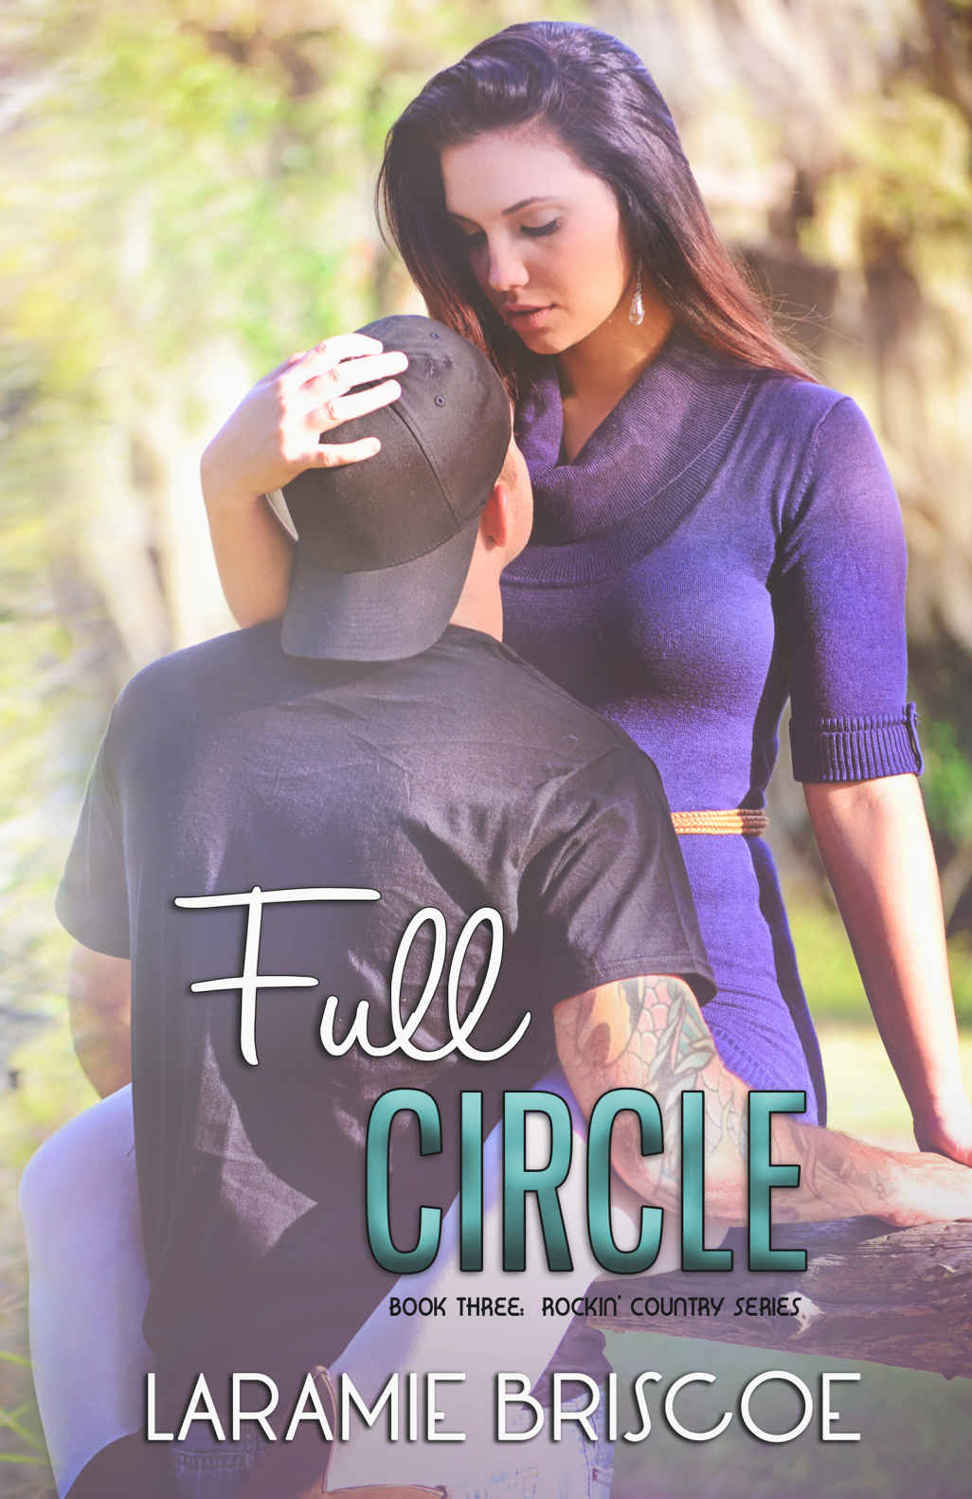 Full Circle (Rockin' Country #3) by Laramie Briscoe